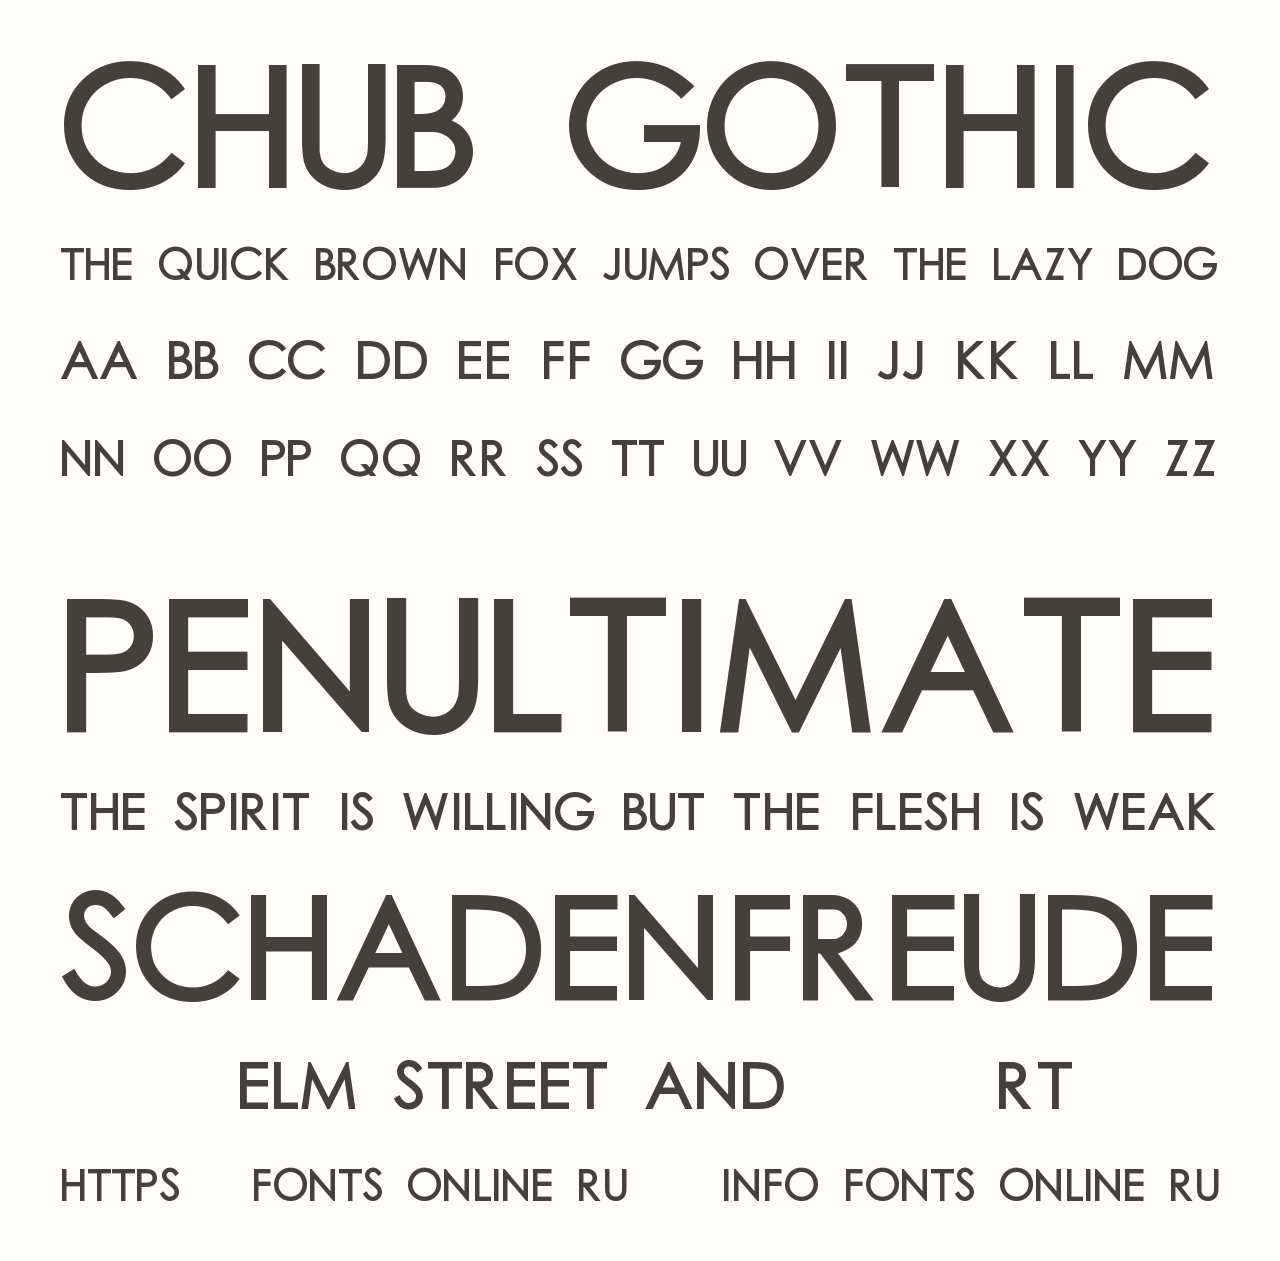 Chub Gothic font